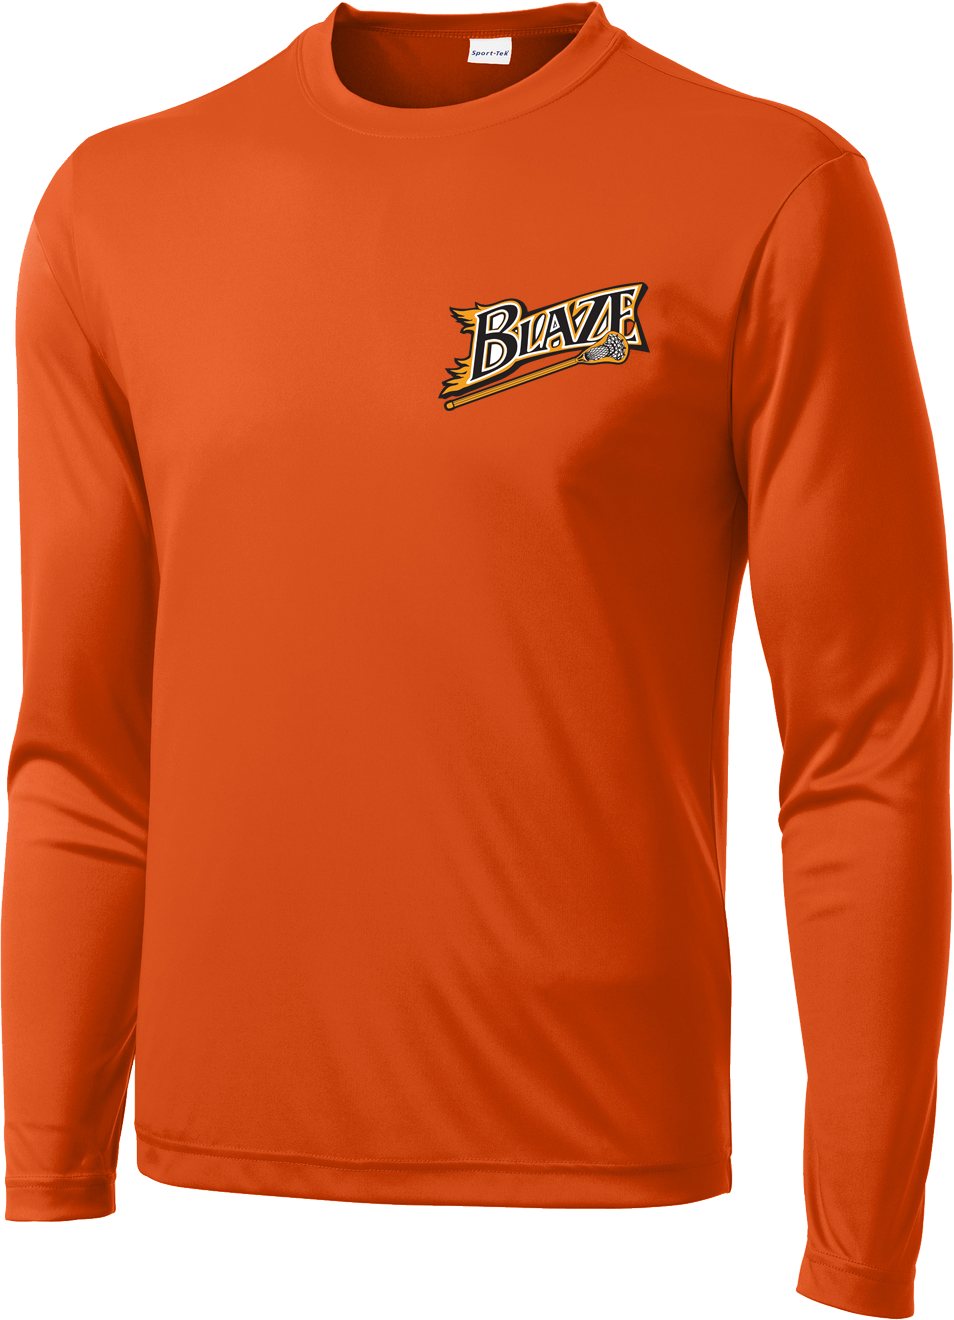 Blaze Lacrosse Orange Long Sleeve Performance Shirt